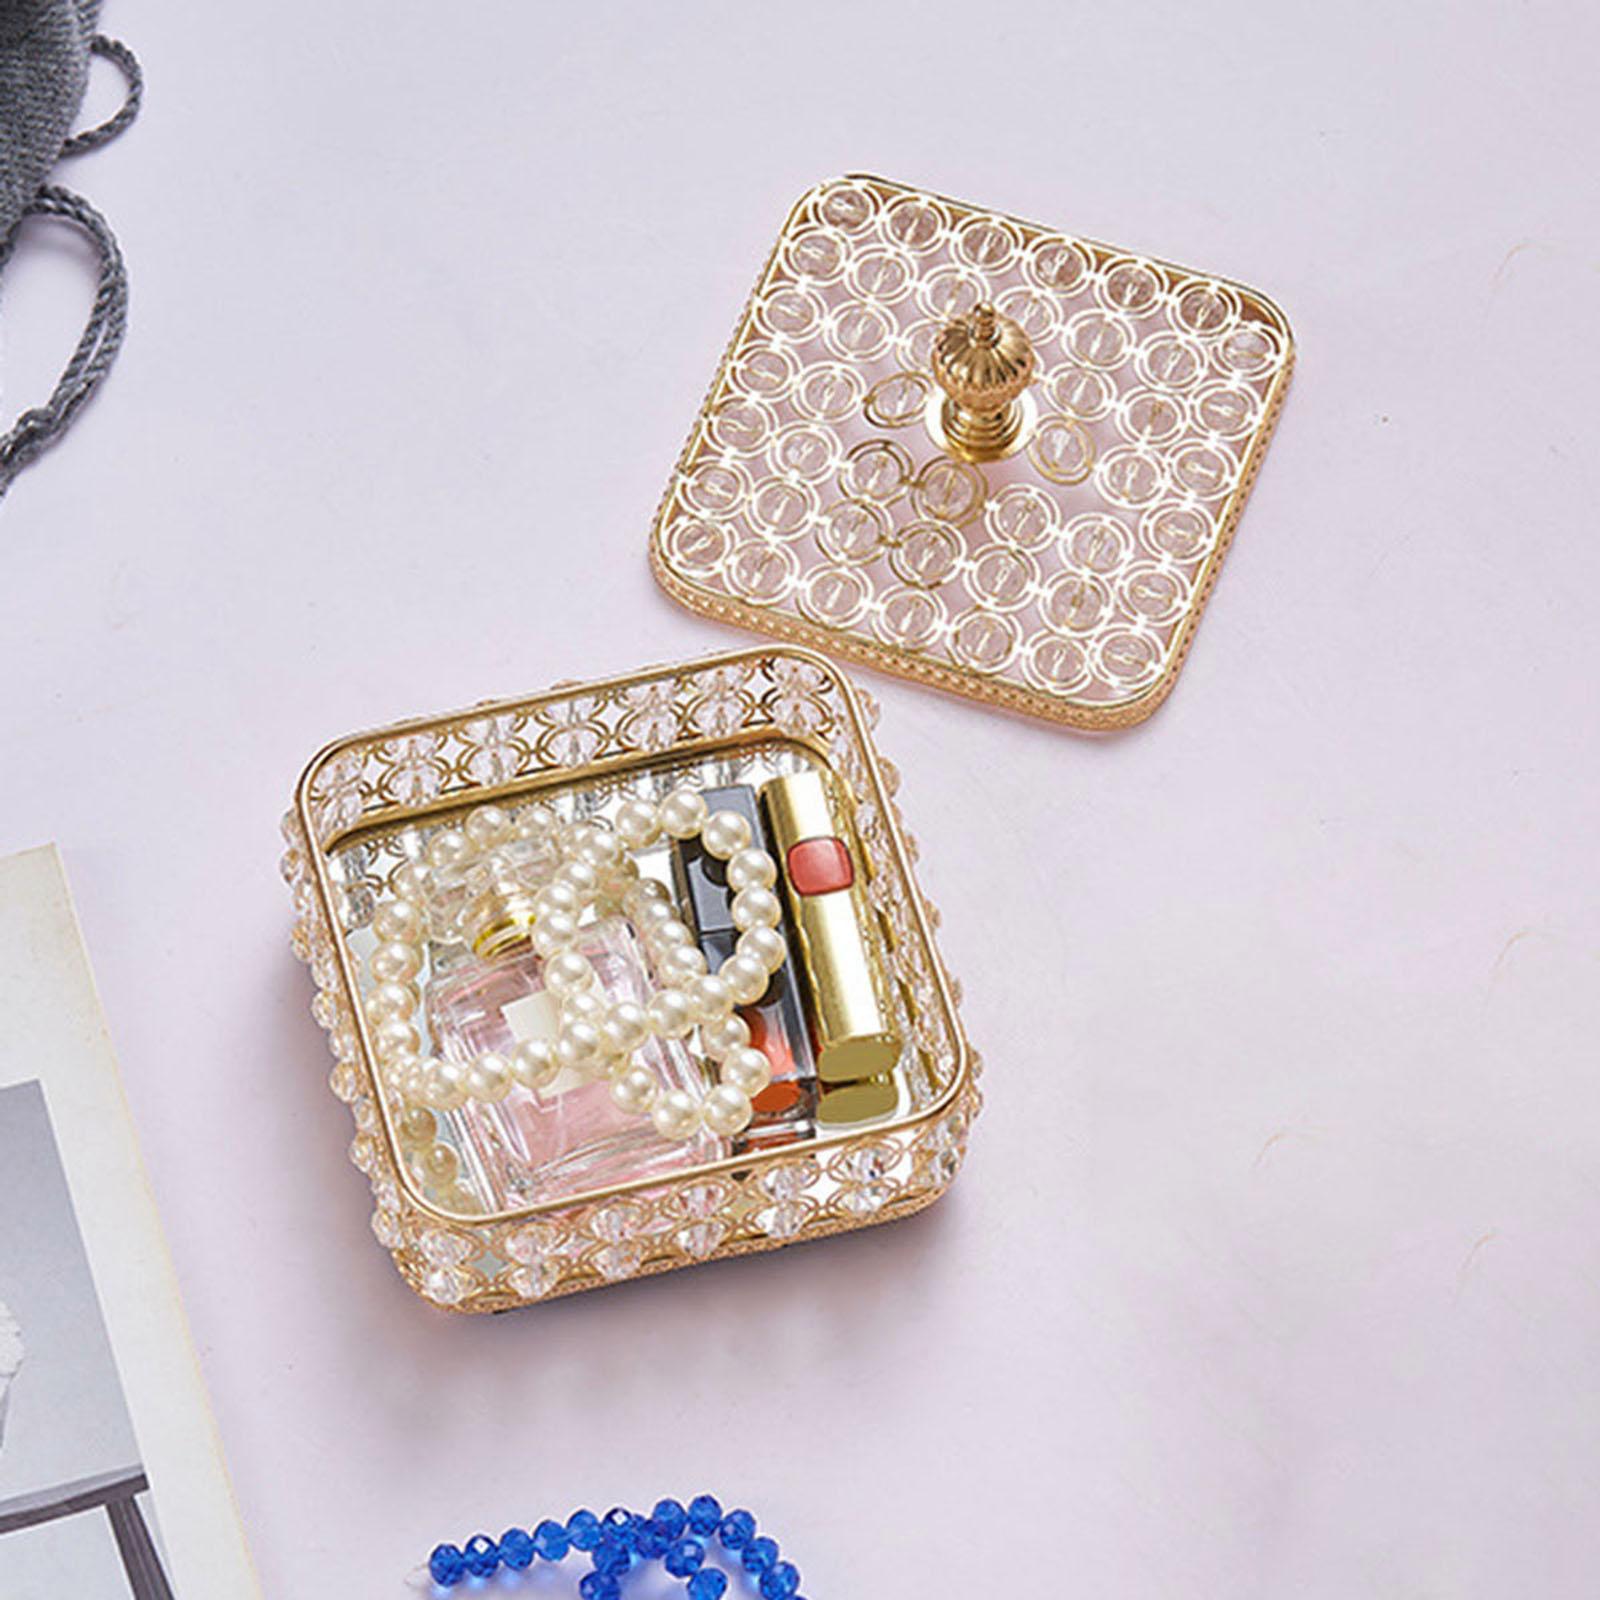 Vintage Crystal Jewelry Box Trinket Organizer Rings Earrings Wedding Small